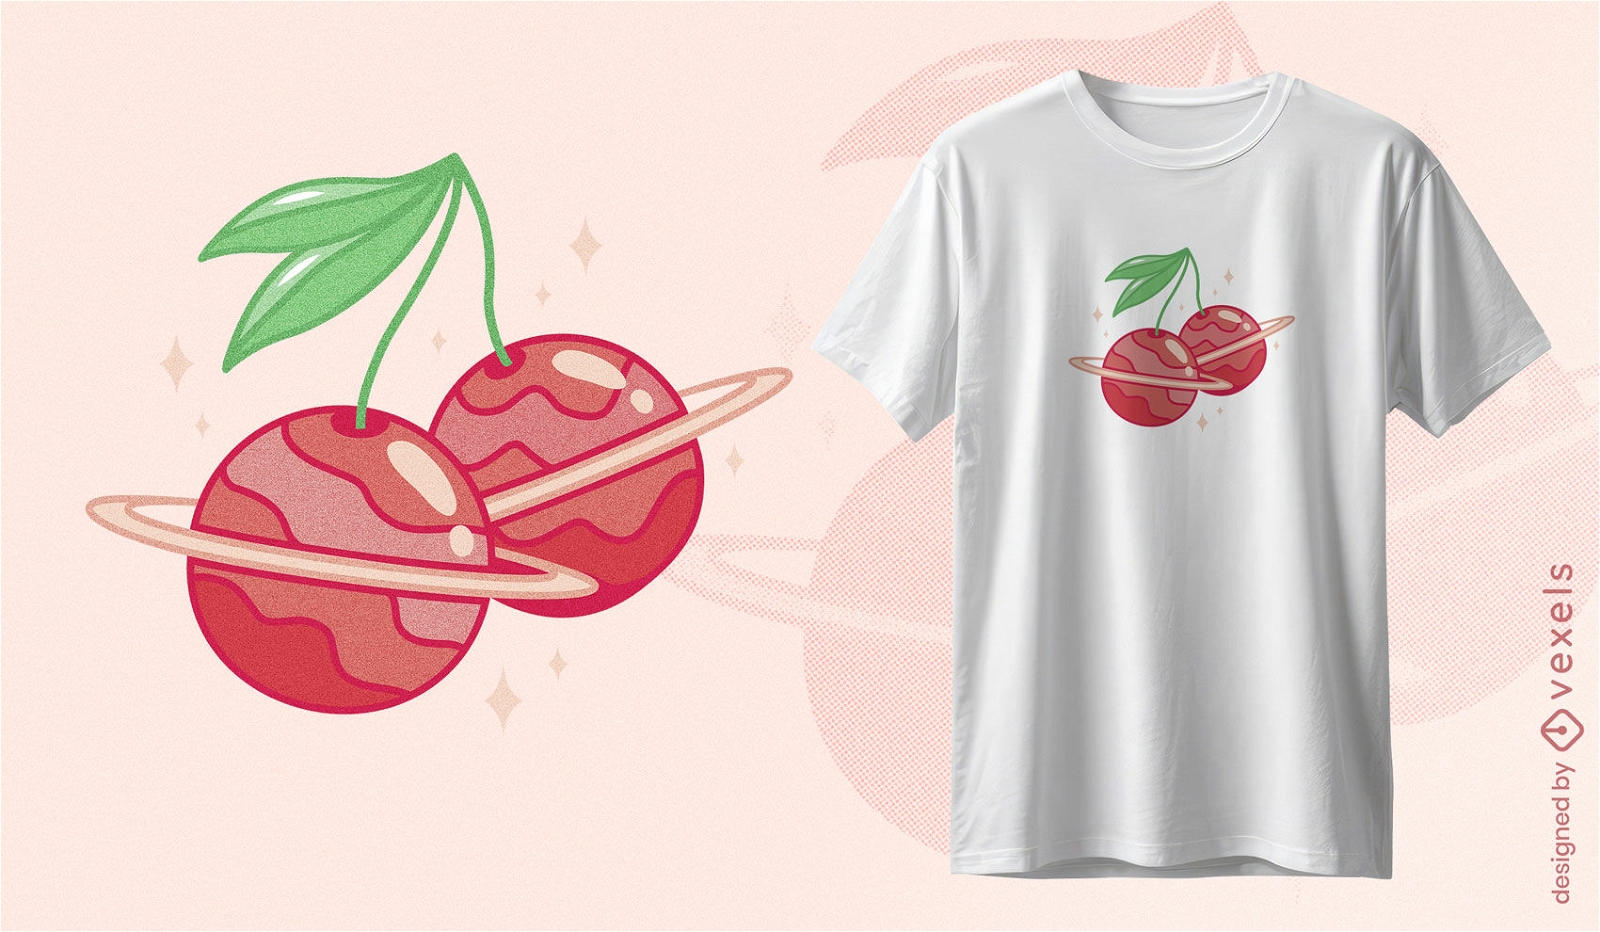 Cherry planets t-shirt design